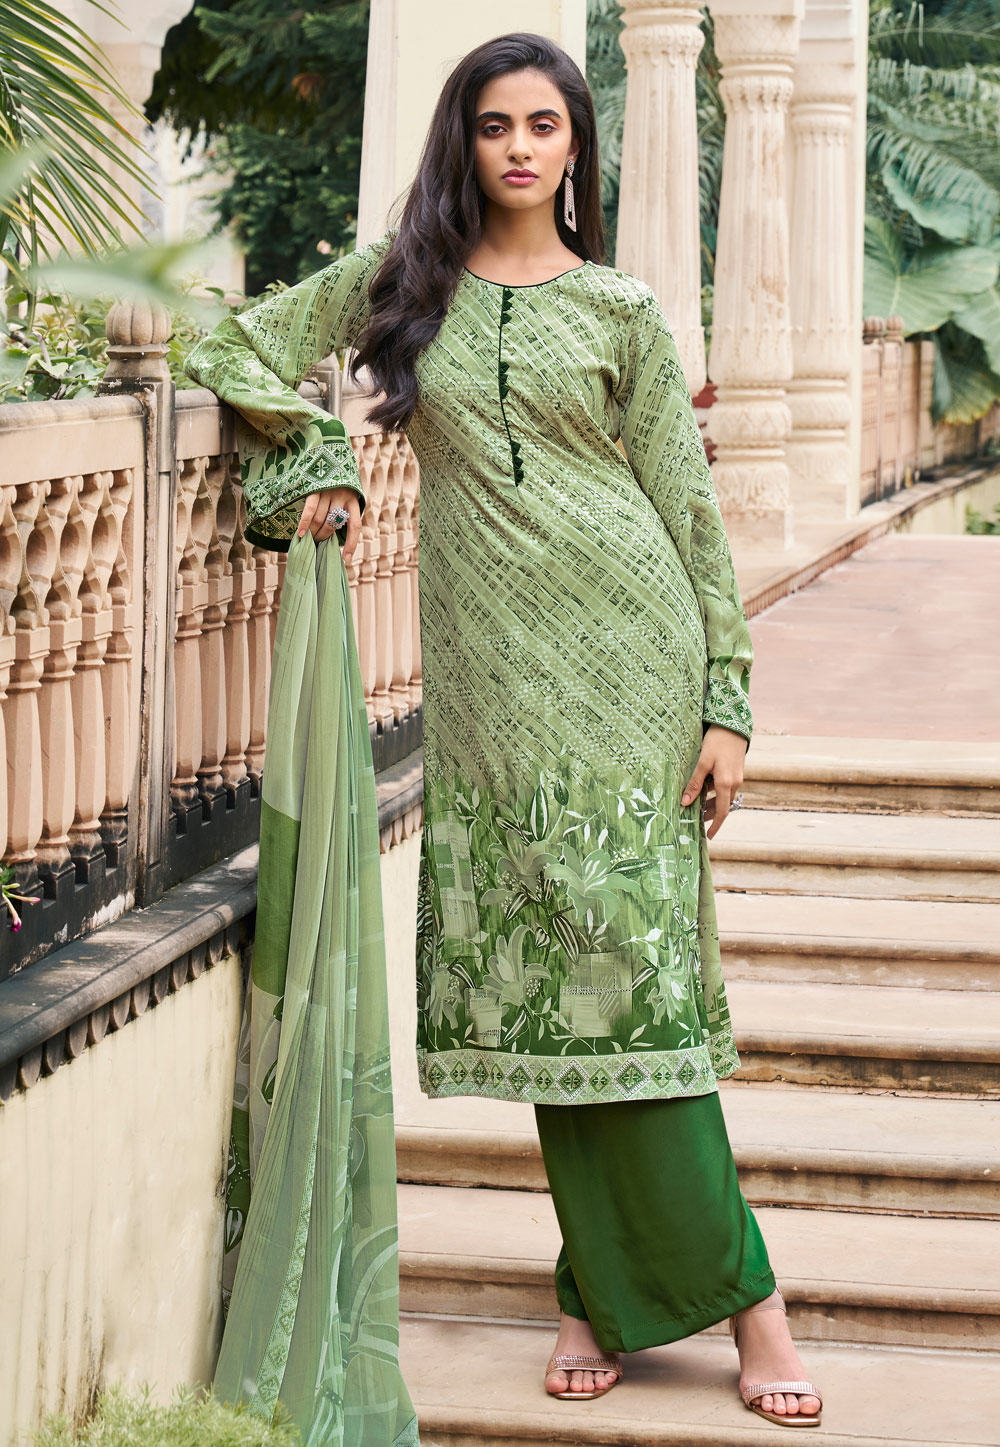 Light Pista Green Embroidered Georgette Pakistani Suit at Rs 2199.00 |  Pakistani Dresses, Pakistani Salwar Suit, Pakistani Salwar Kameez,  Pakistani Cotton Suits, पाकिस्तानी सूट - Maia Nava, Bengaluru | ID:  2851808836991